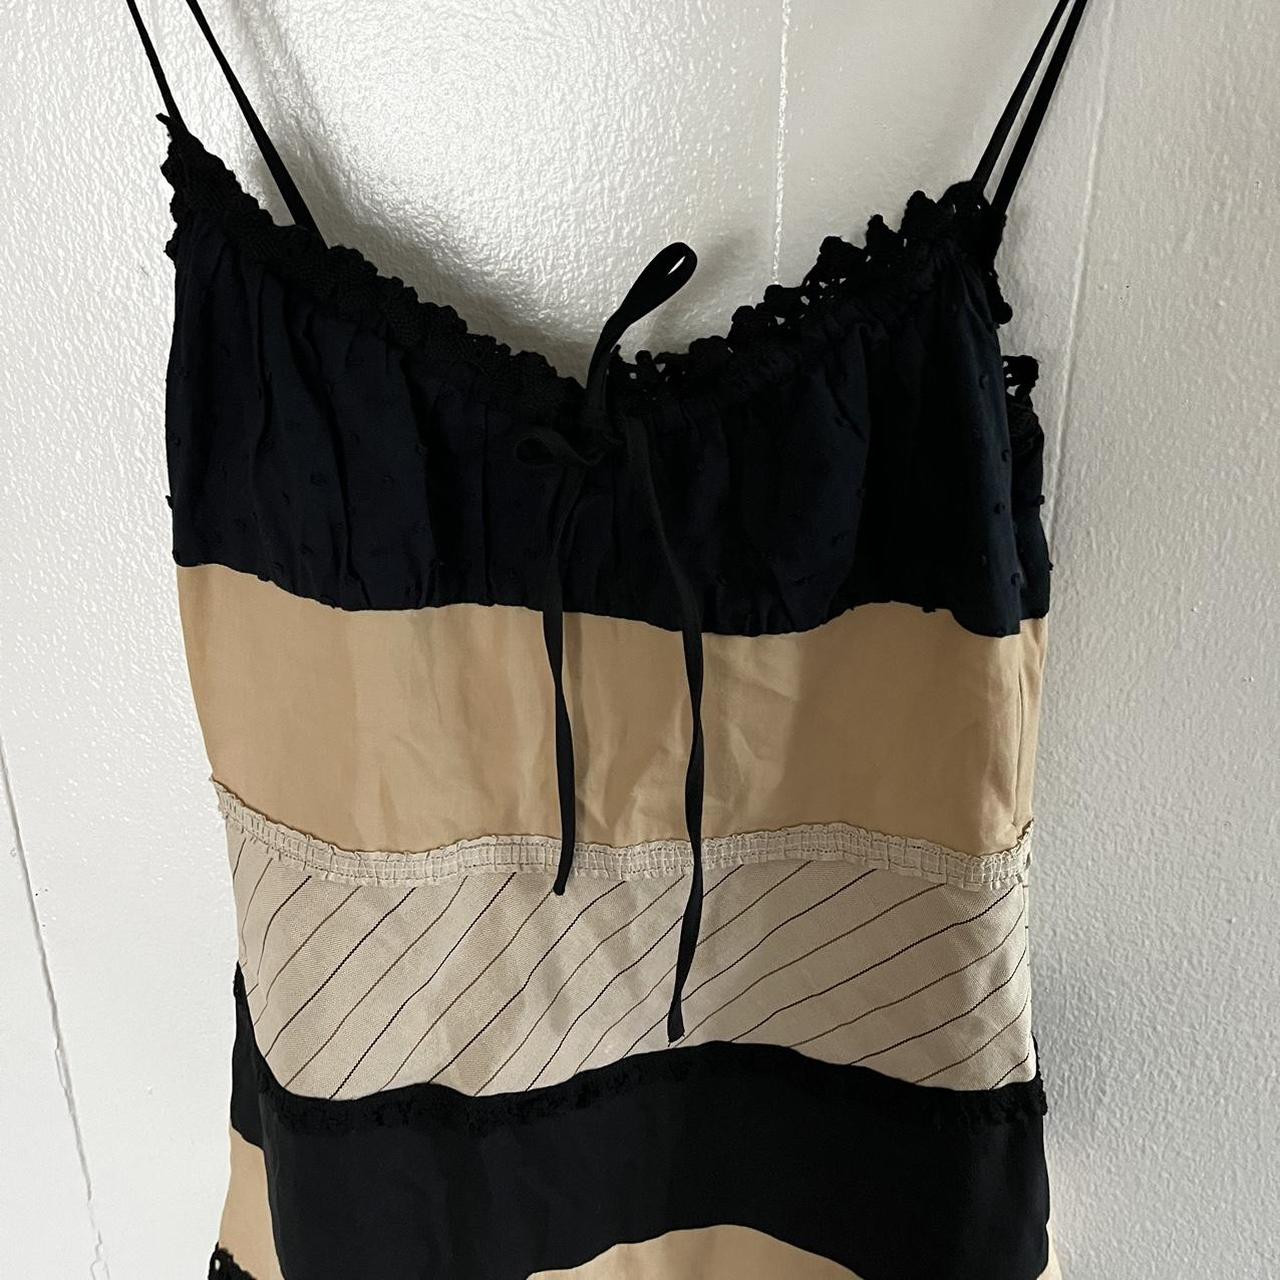 Moschino Cheap & Chic Women's Black and Tan Dress (2)